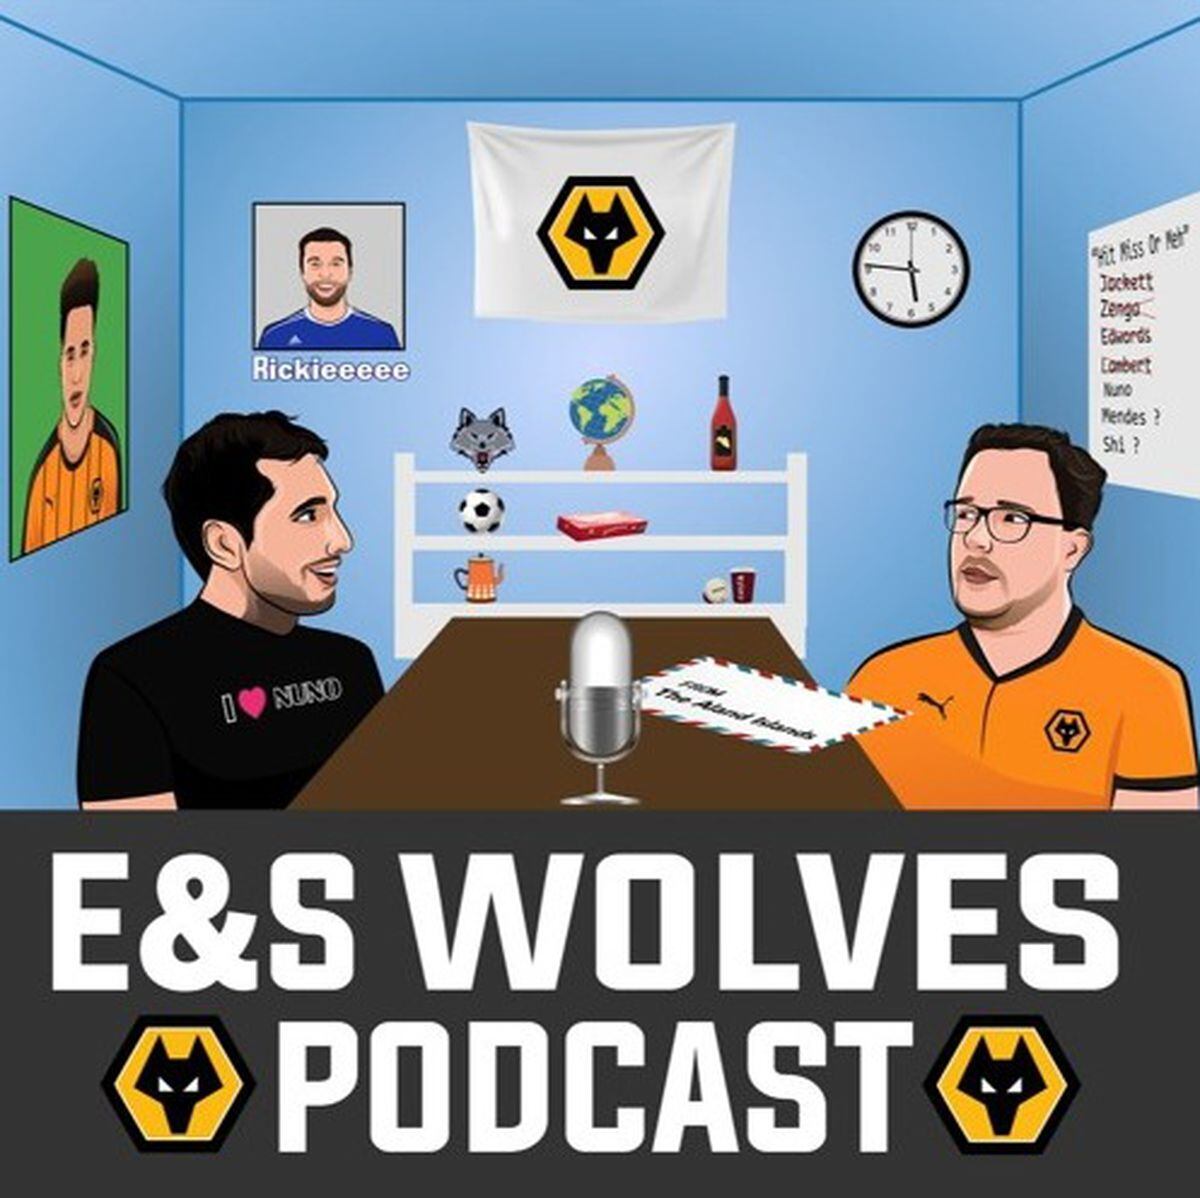 E&S Wolves Podcast - Episode 115